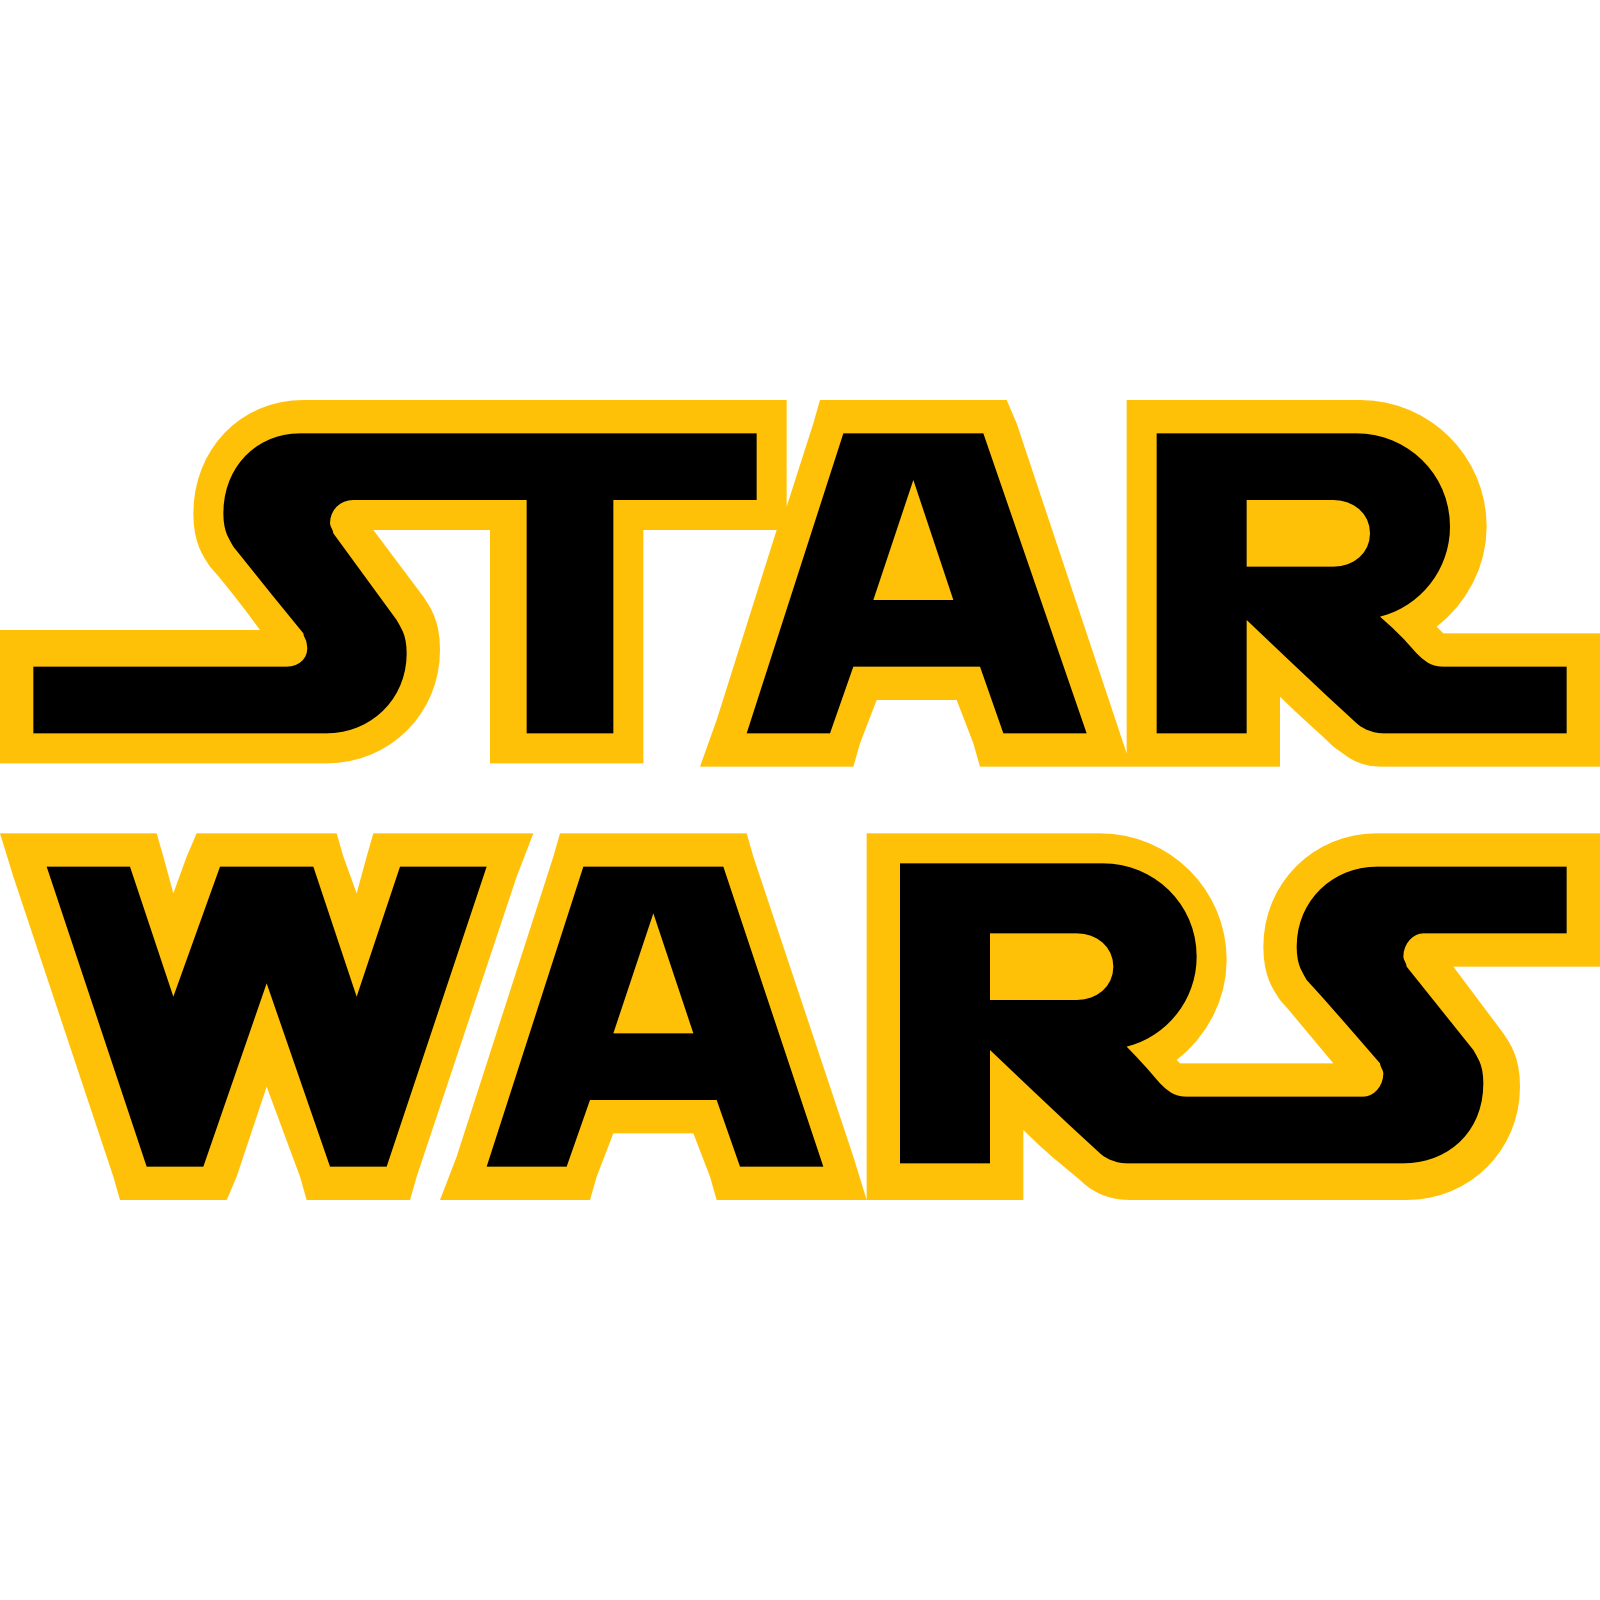 Star Wars Logo Png - Star Wars, Transparent background PNG HD thumbnail